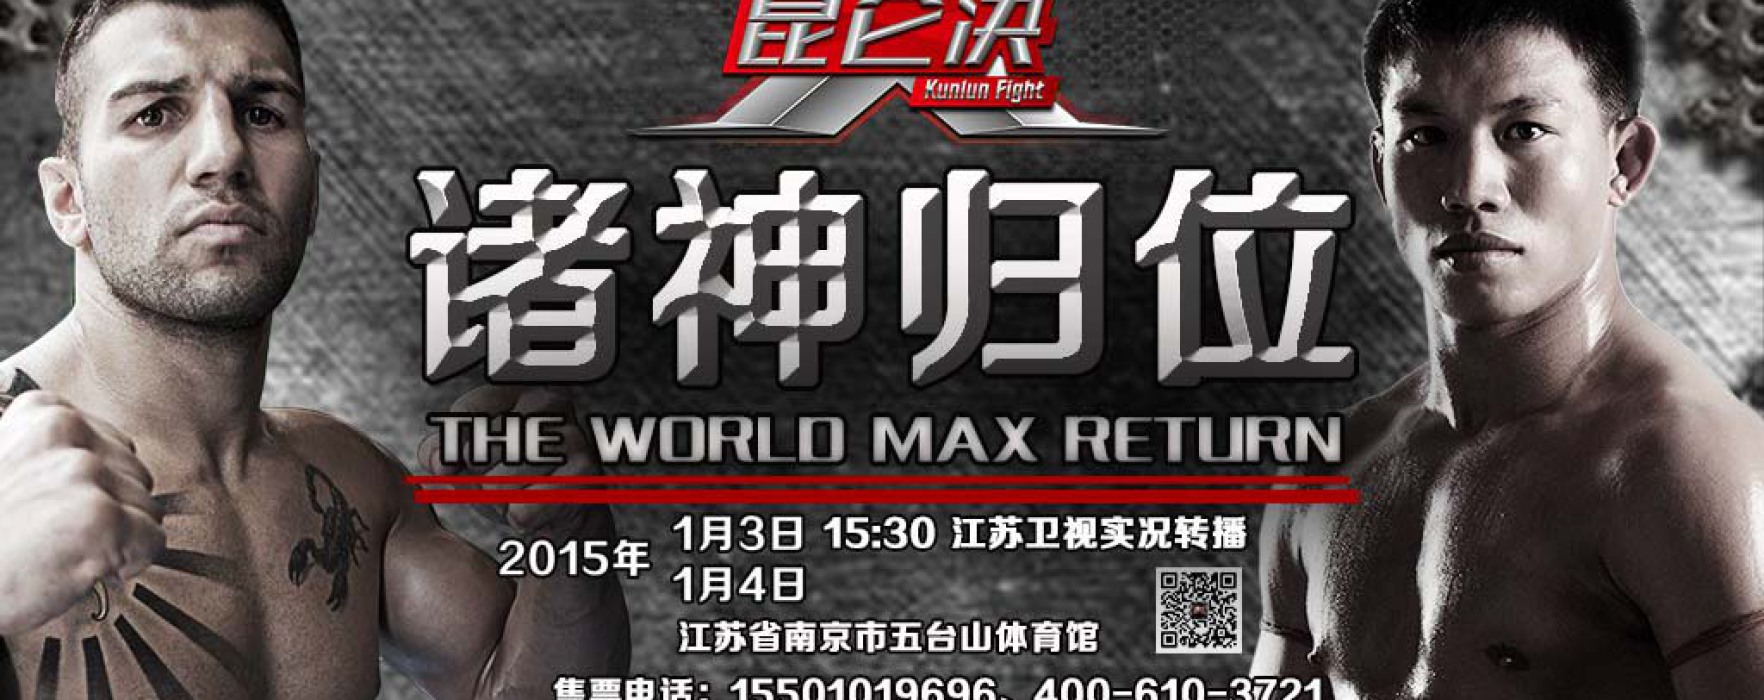 Video: Aikpracha Meenayotin vs Steve Moxon & Victor Nagbe at Kunlun Fight: The world max return – 4th January 2015